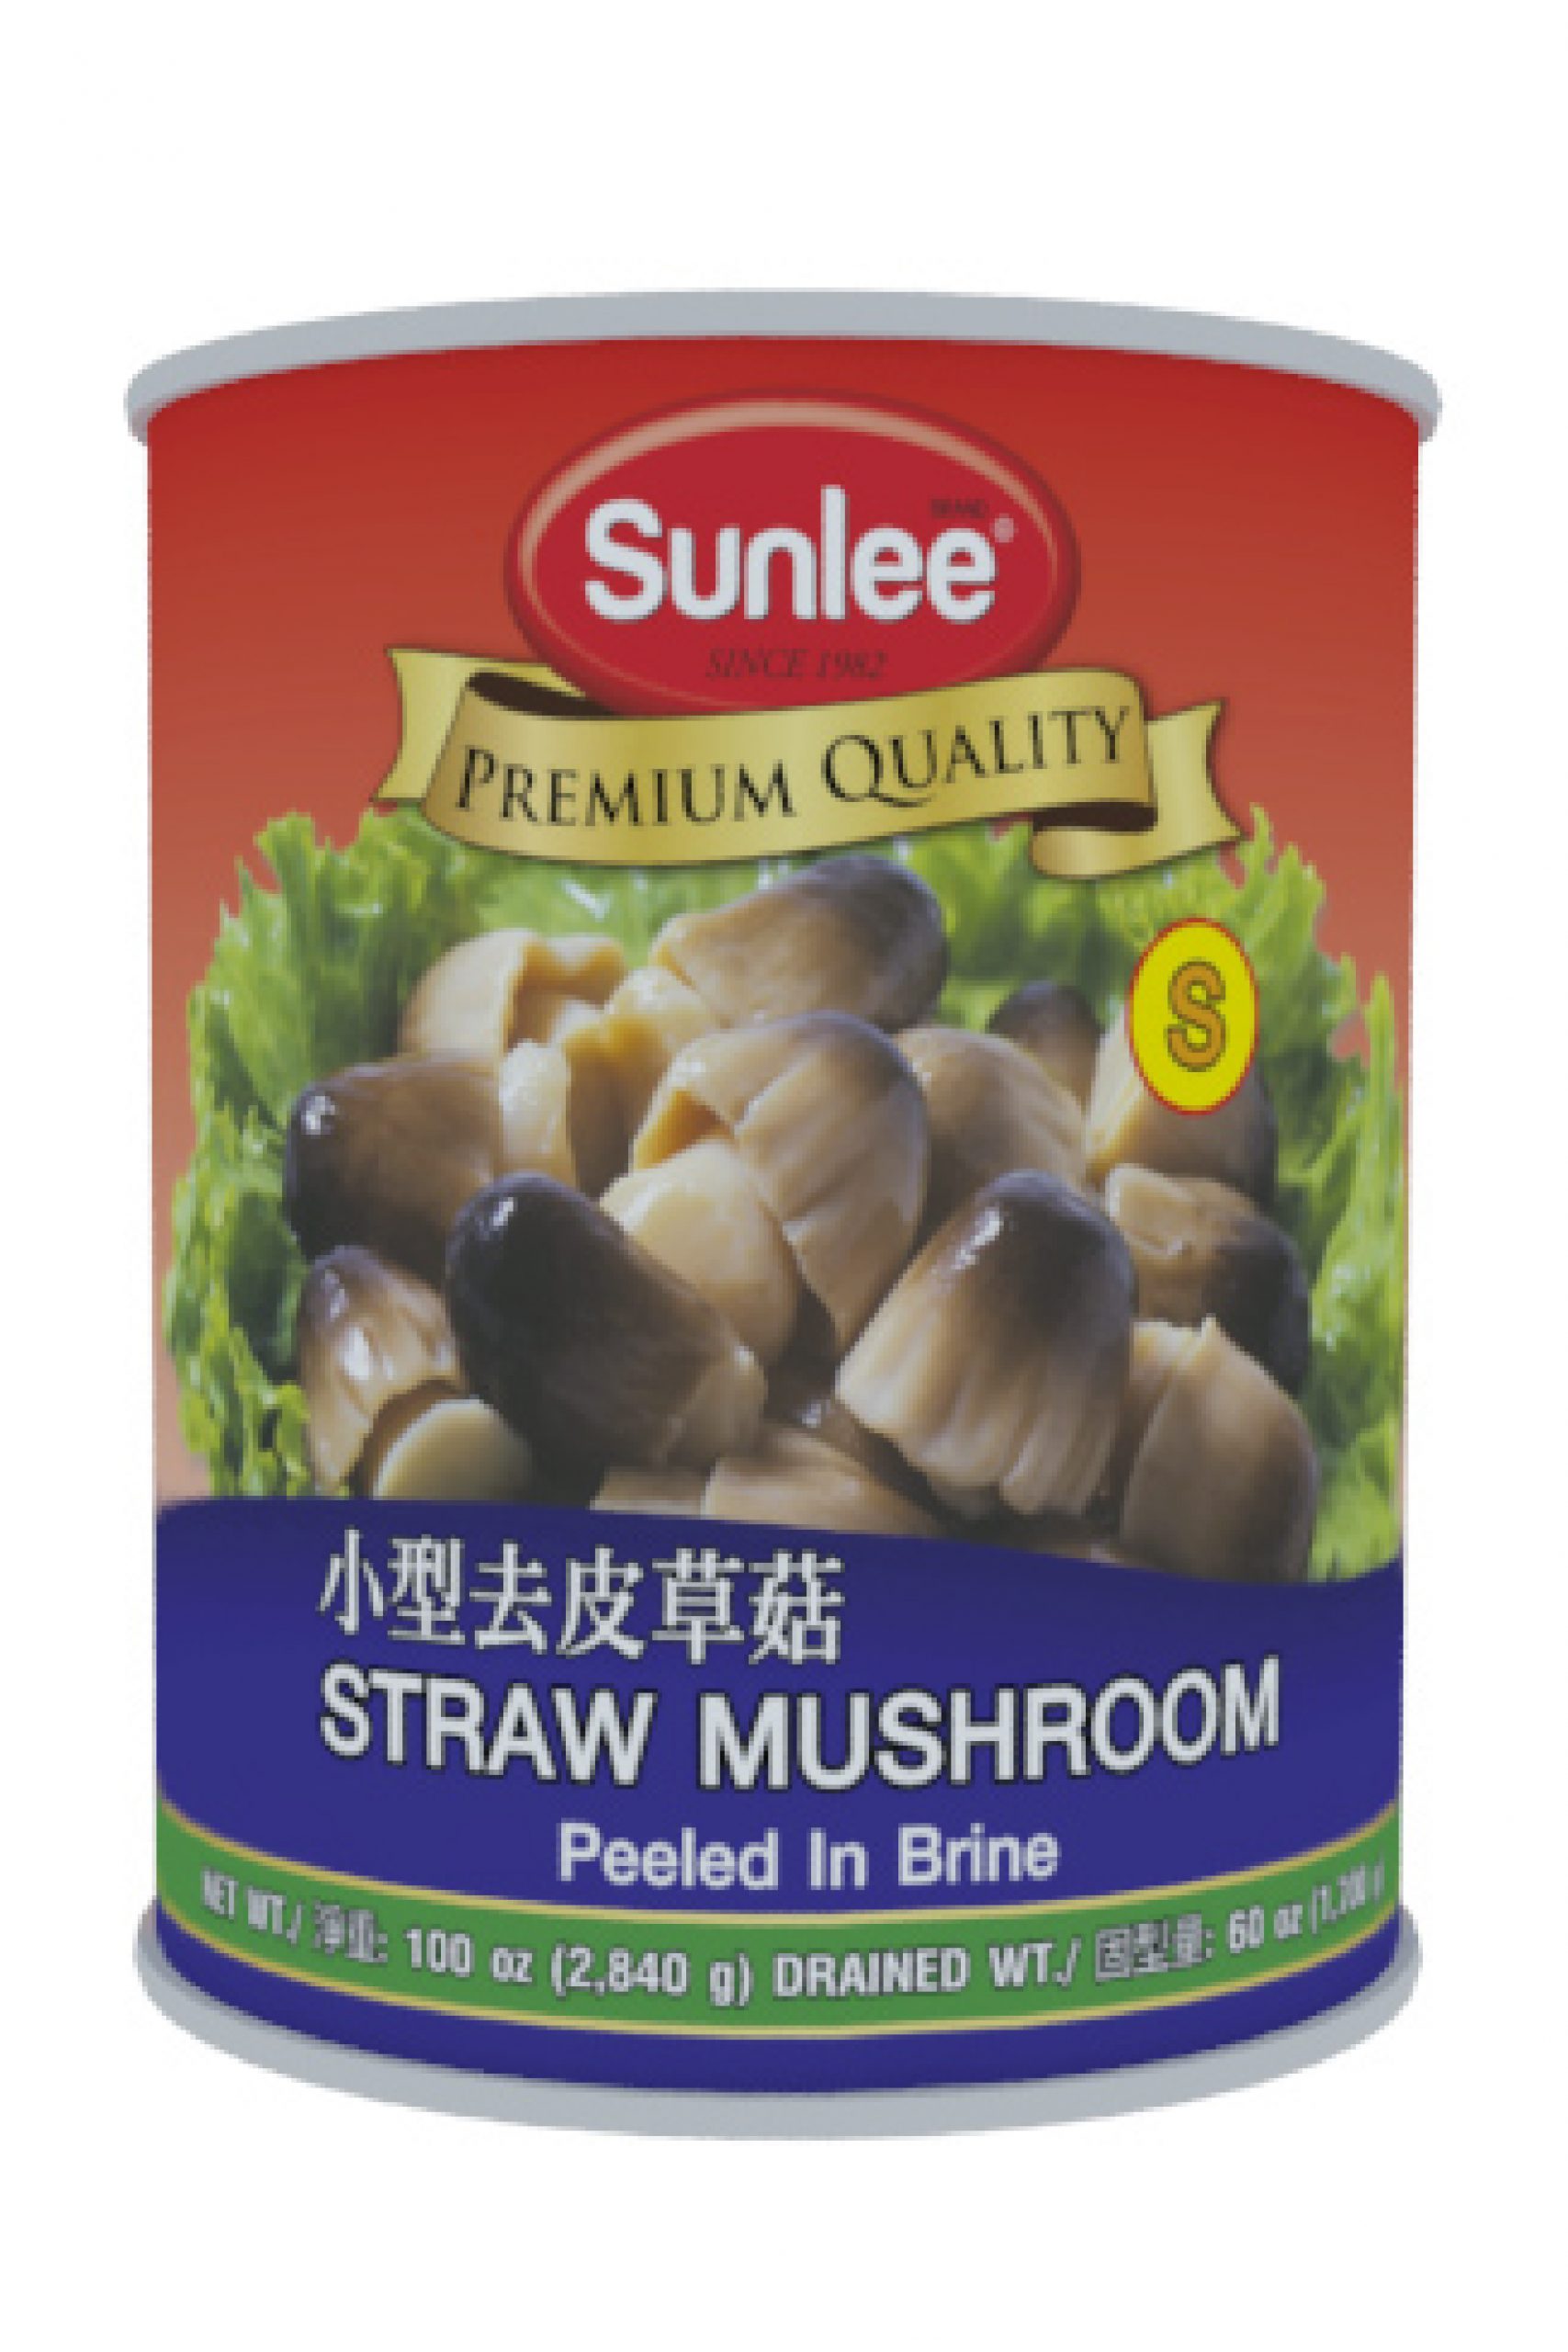 Straw Mushrooms